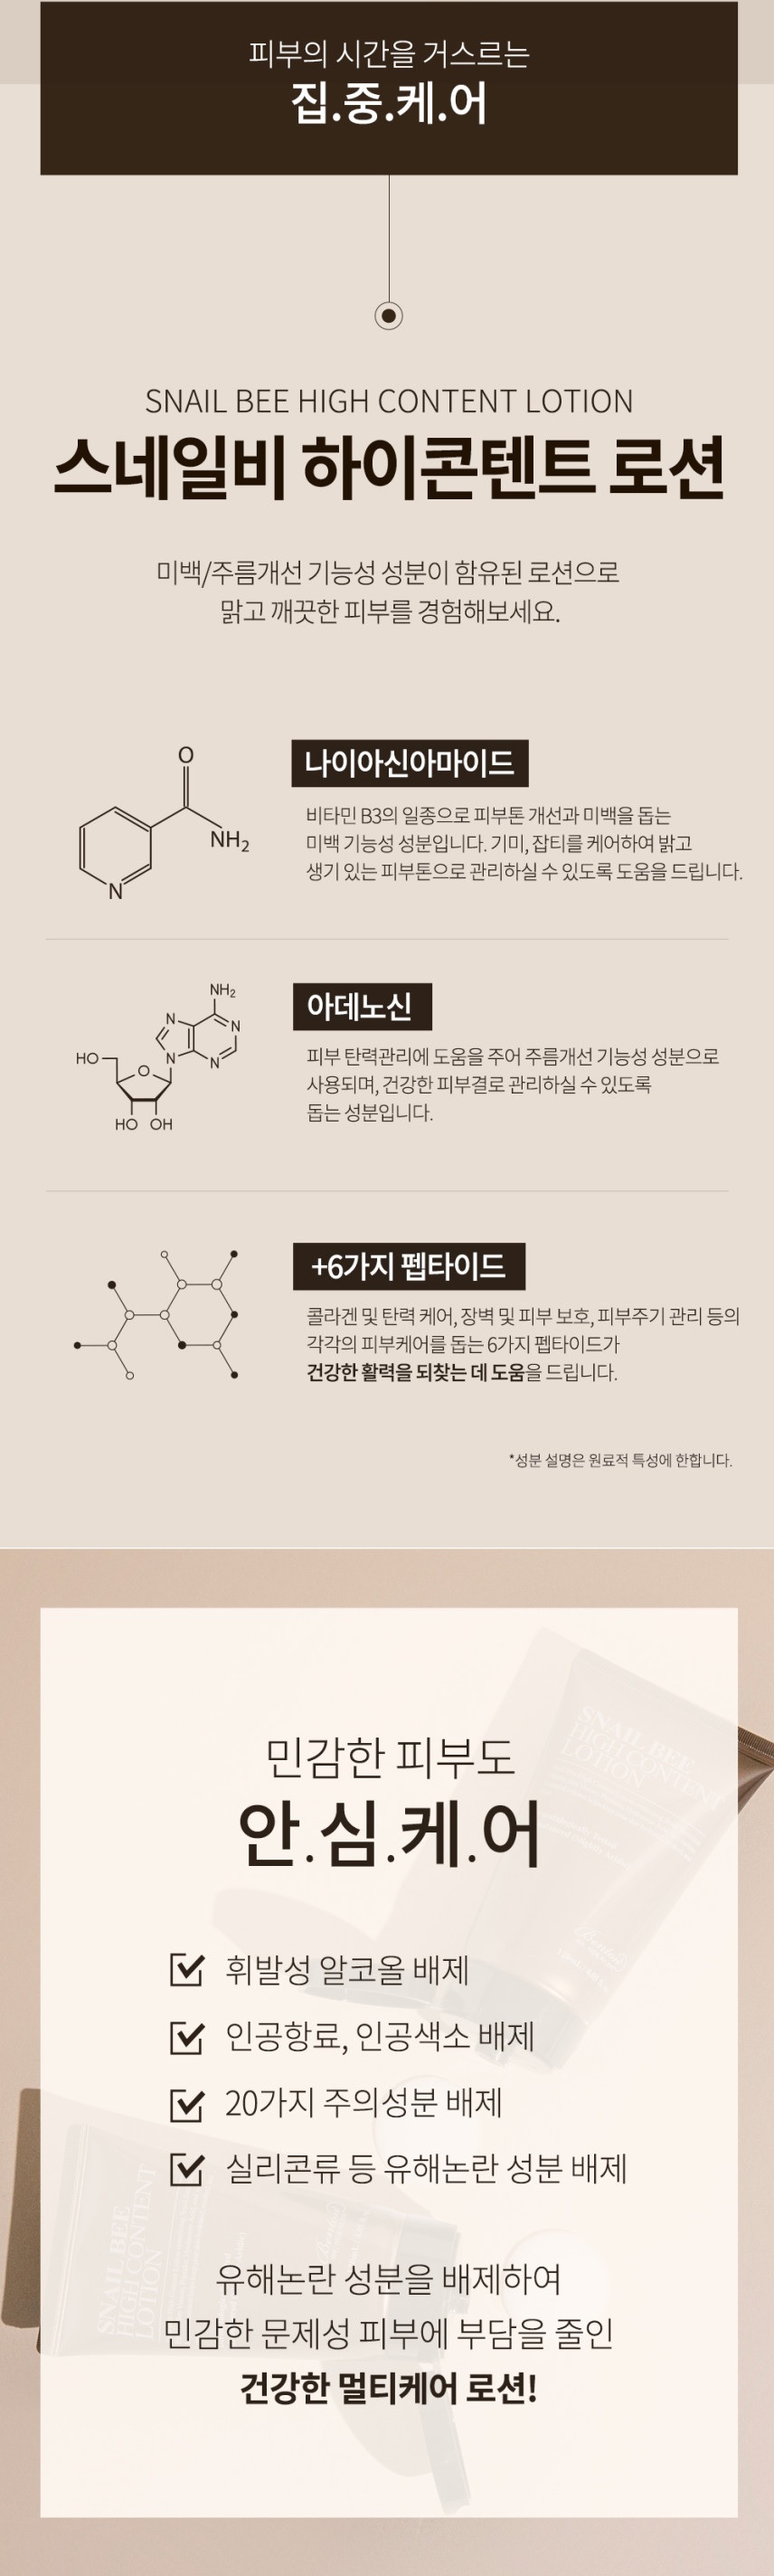 Benton Snail Bee High Content Lotion korean skincare product online shop malaysia China romania3